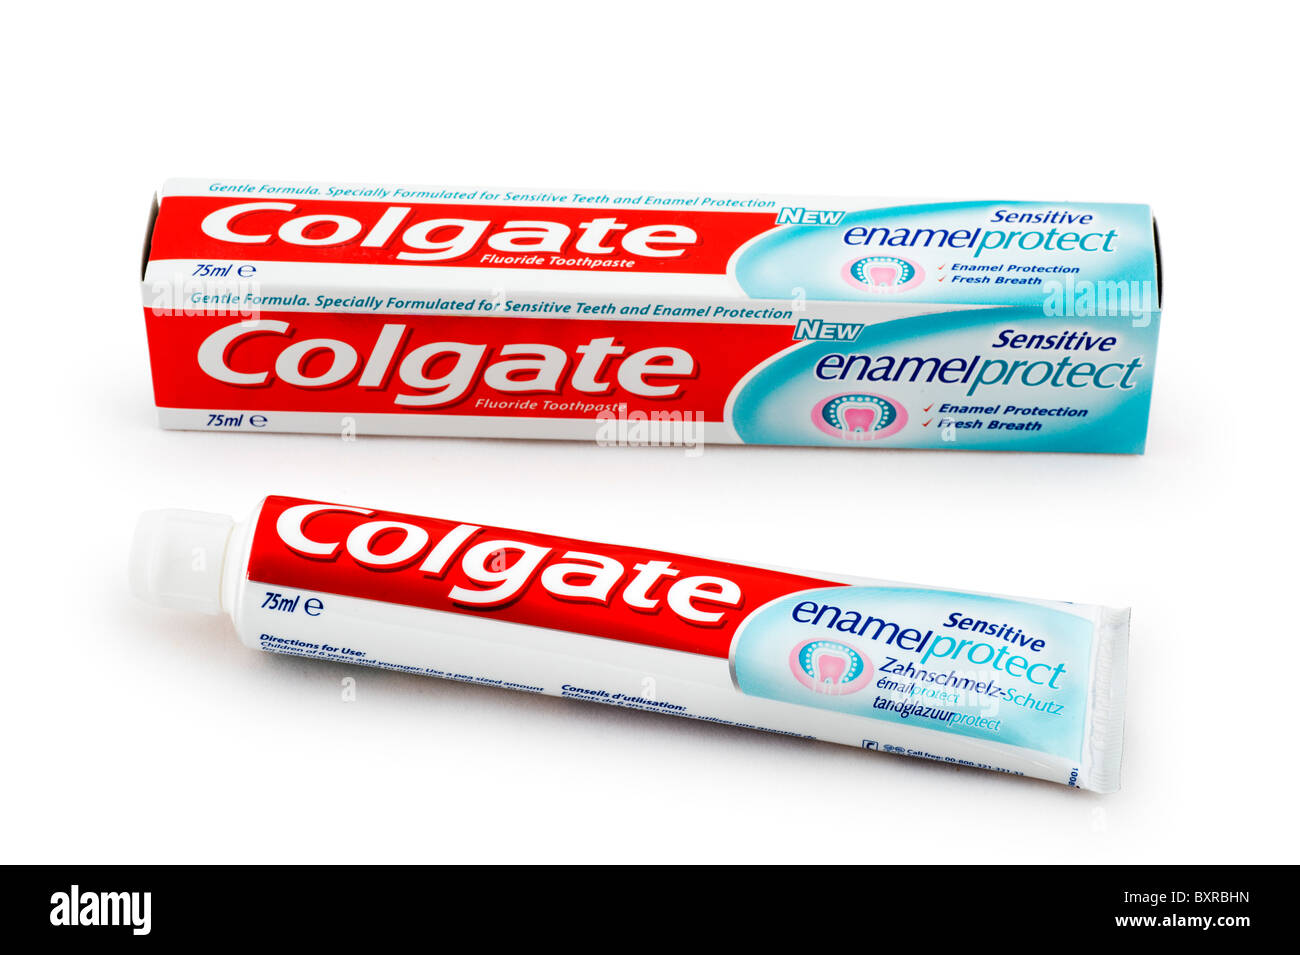 Tube of Colgate Sensitive Enamel Protect toothpaste, UK Stock Photo